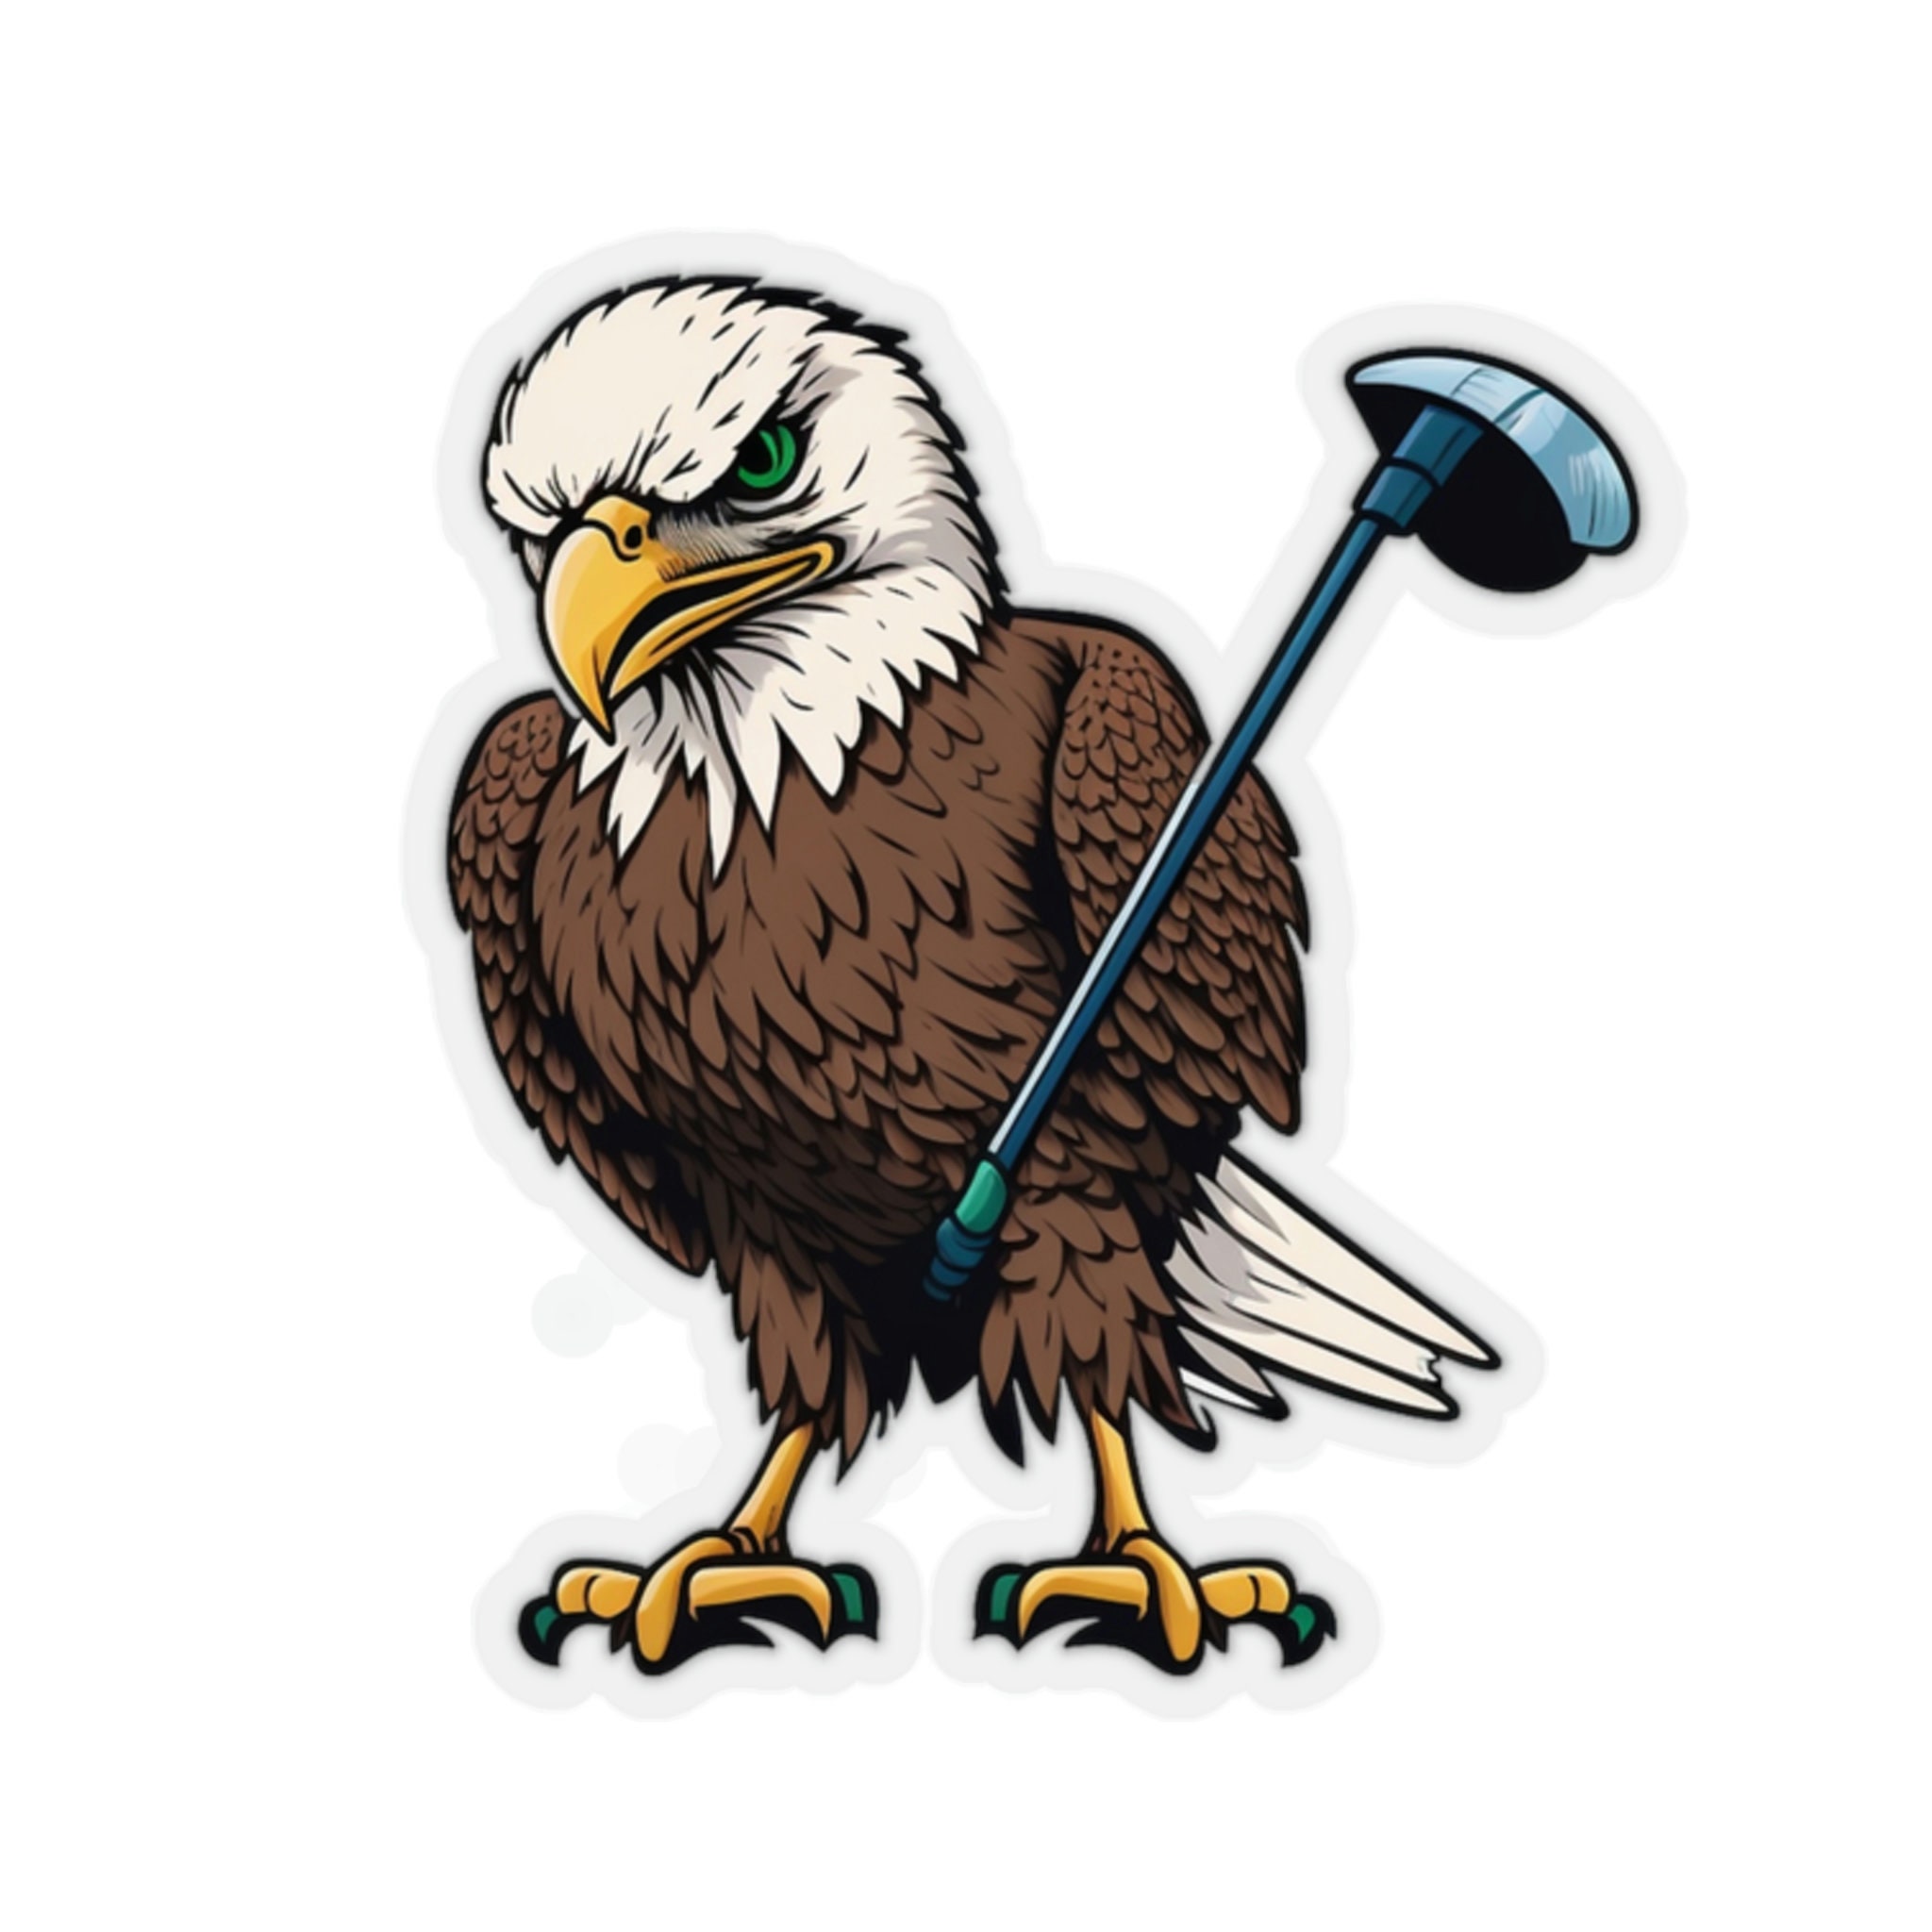 Polish Eagle Golf Club Cover 